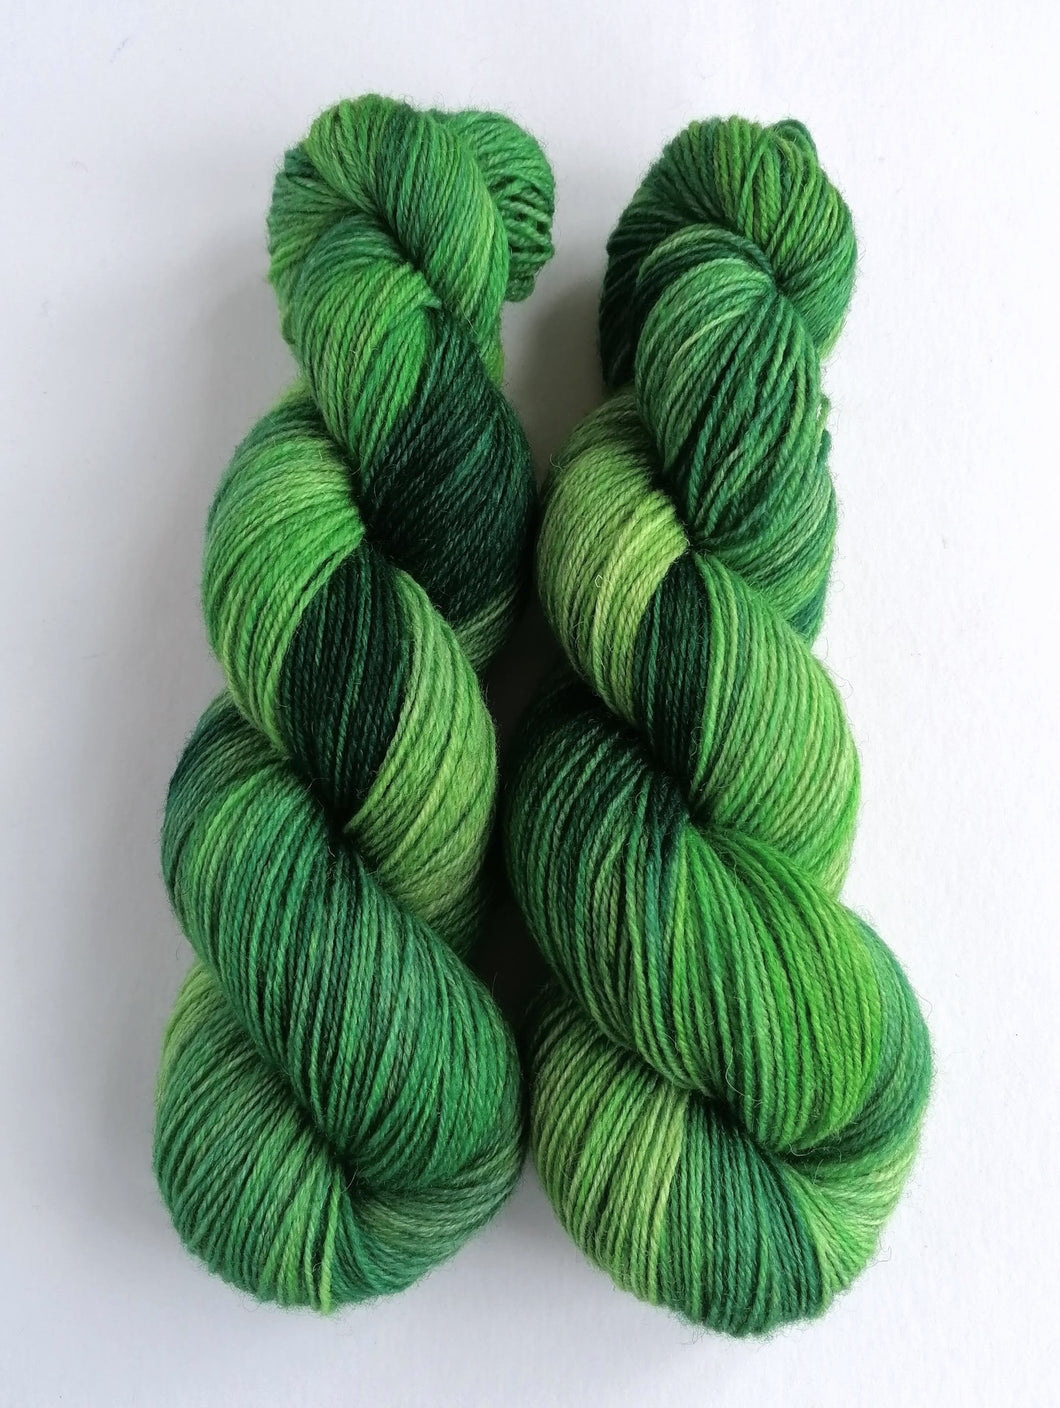 Hand dyed British wool sock yarn, Superwash Exmoor Blueface/Corriedale/Zwartbles/nylon freeshipping - Felt Fusion